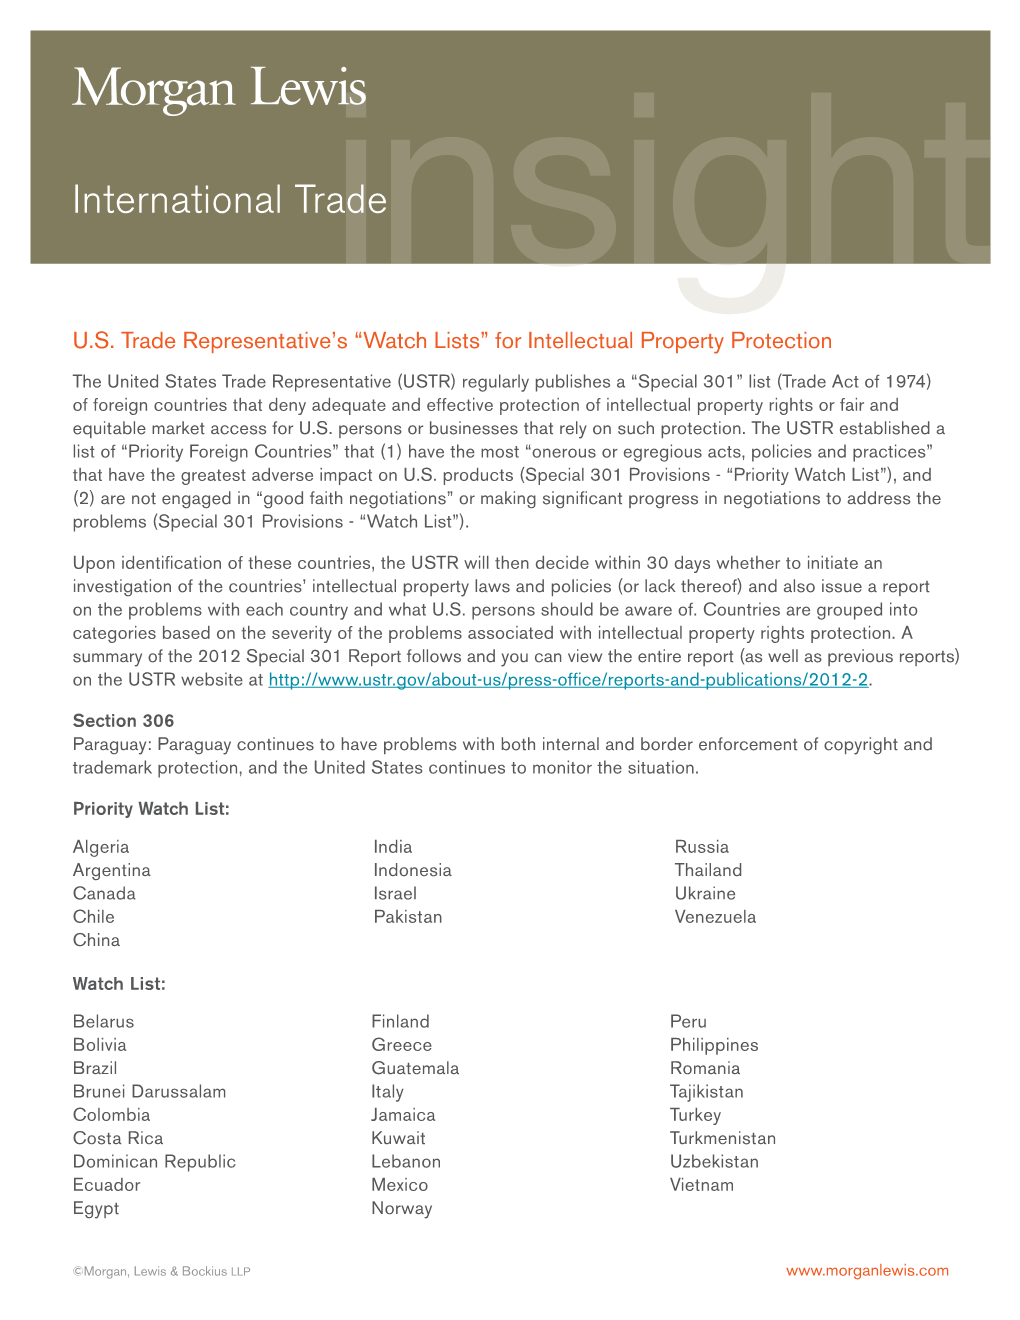 International Tradeinsight U.S